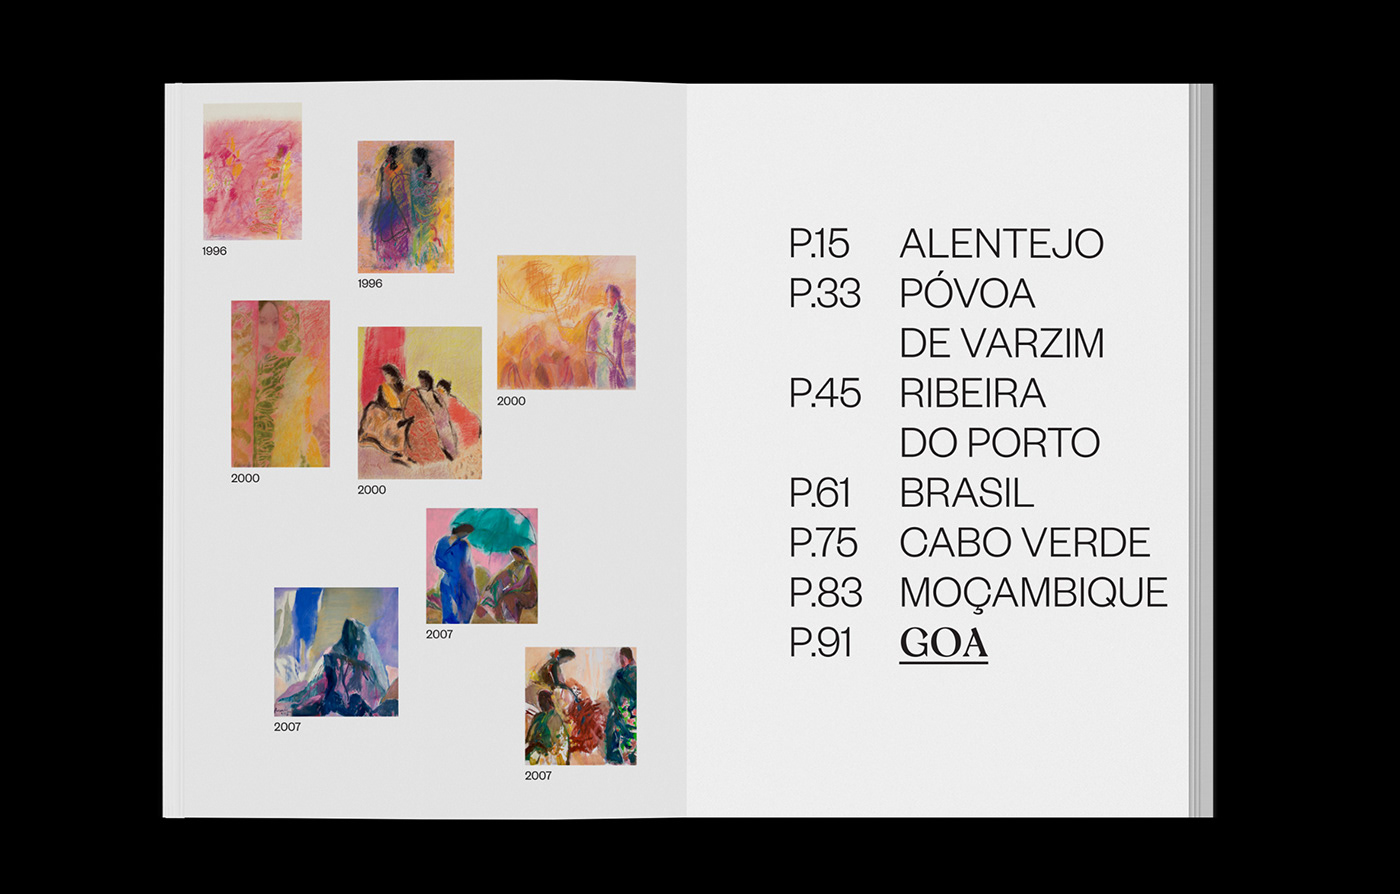 Catalogue Júlio Resende lugar do desenho esad idea Exhibition  painting  